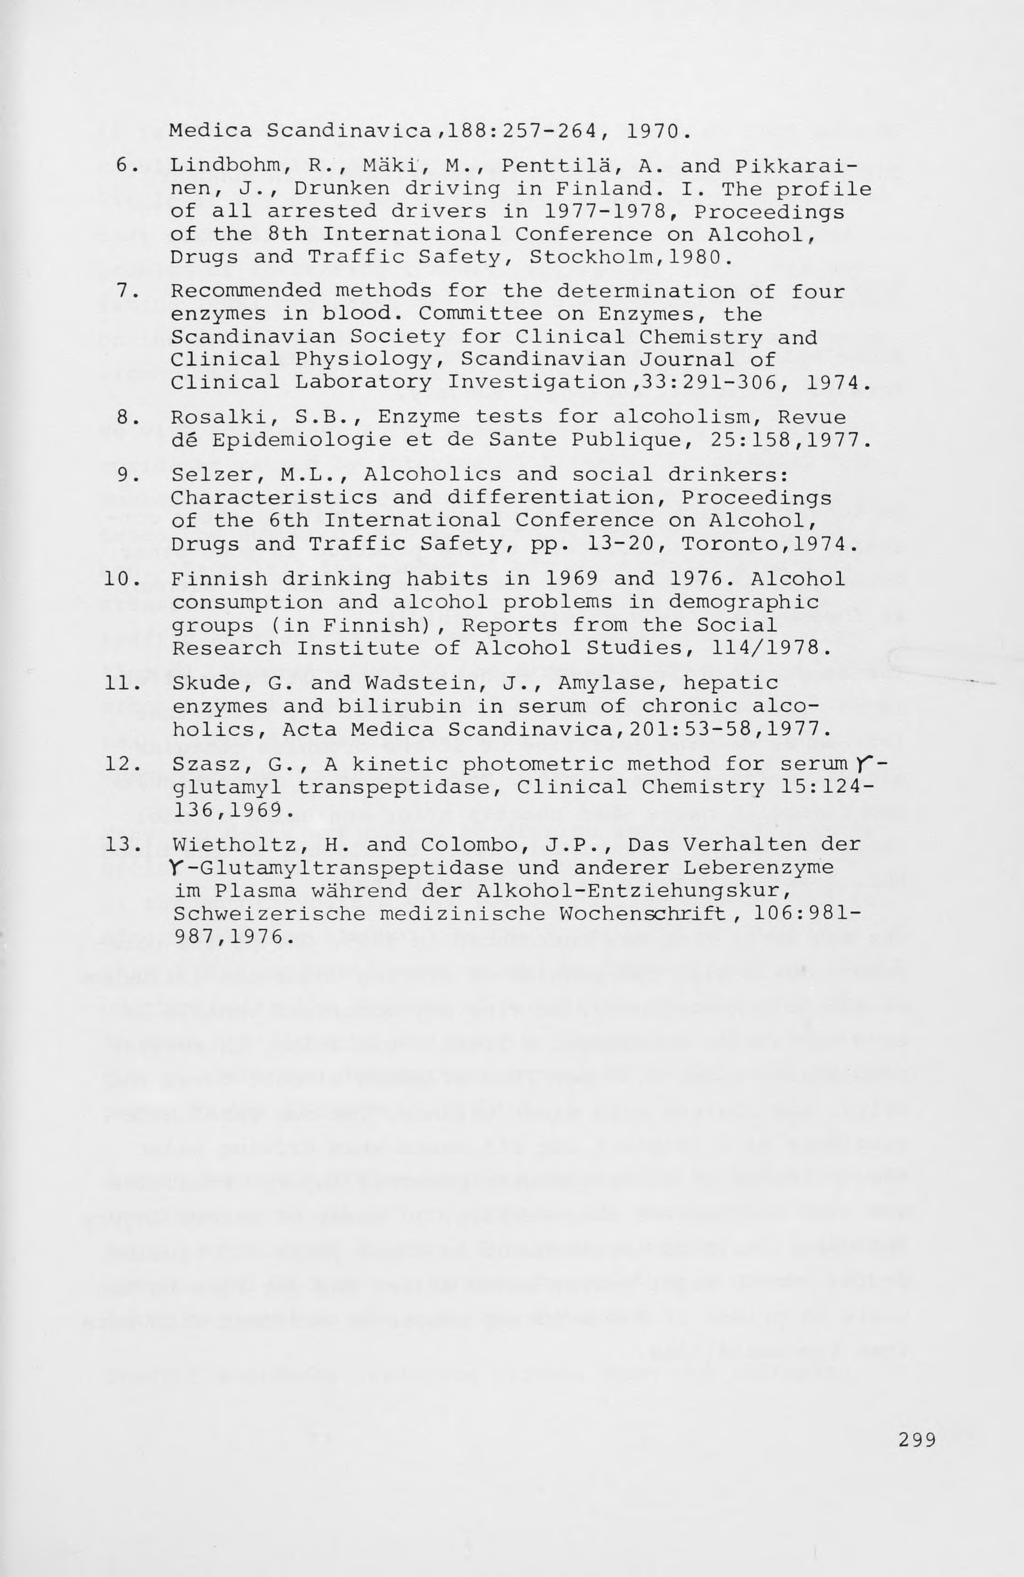 Medica Scandinavica,188:257-264, 1970. 6. Lindbohm, R., Maki', M., Penttila, A. and Pikkarainen, J., Drunken driving in Finland. I.